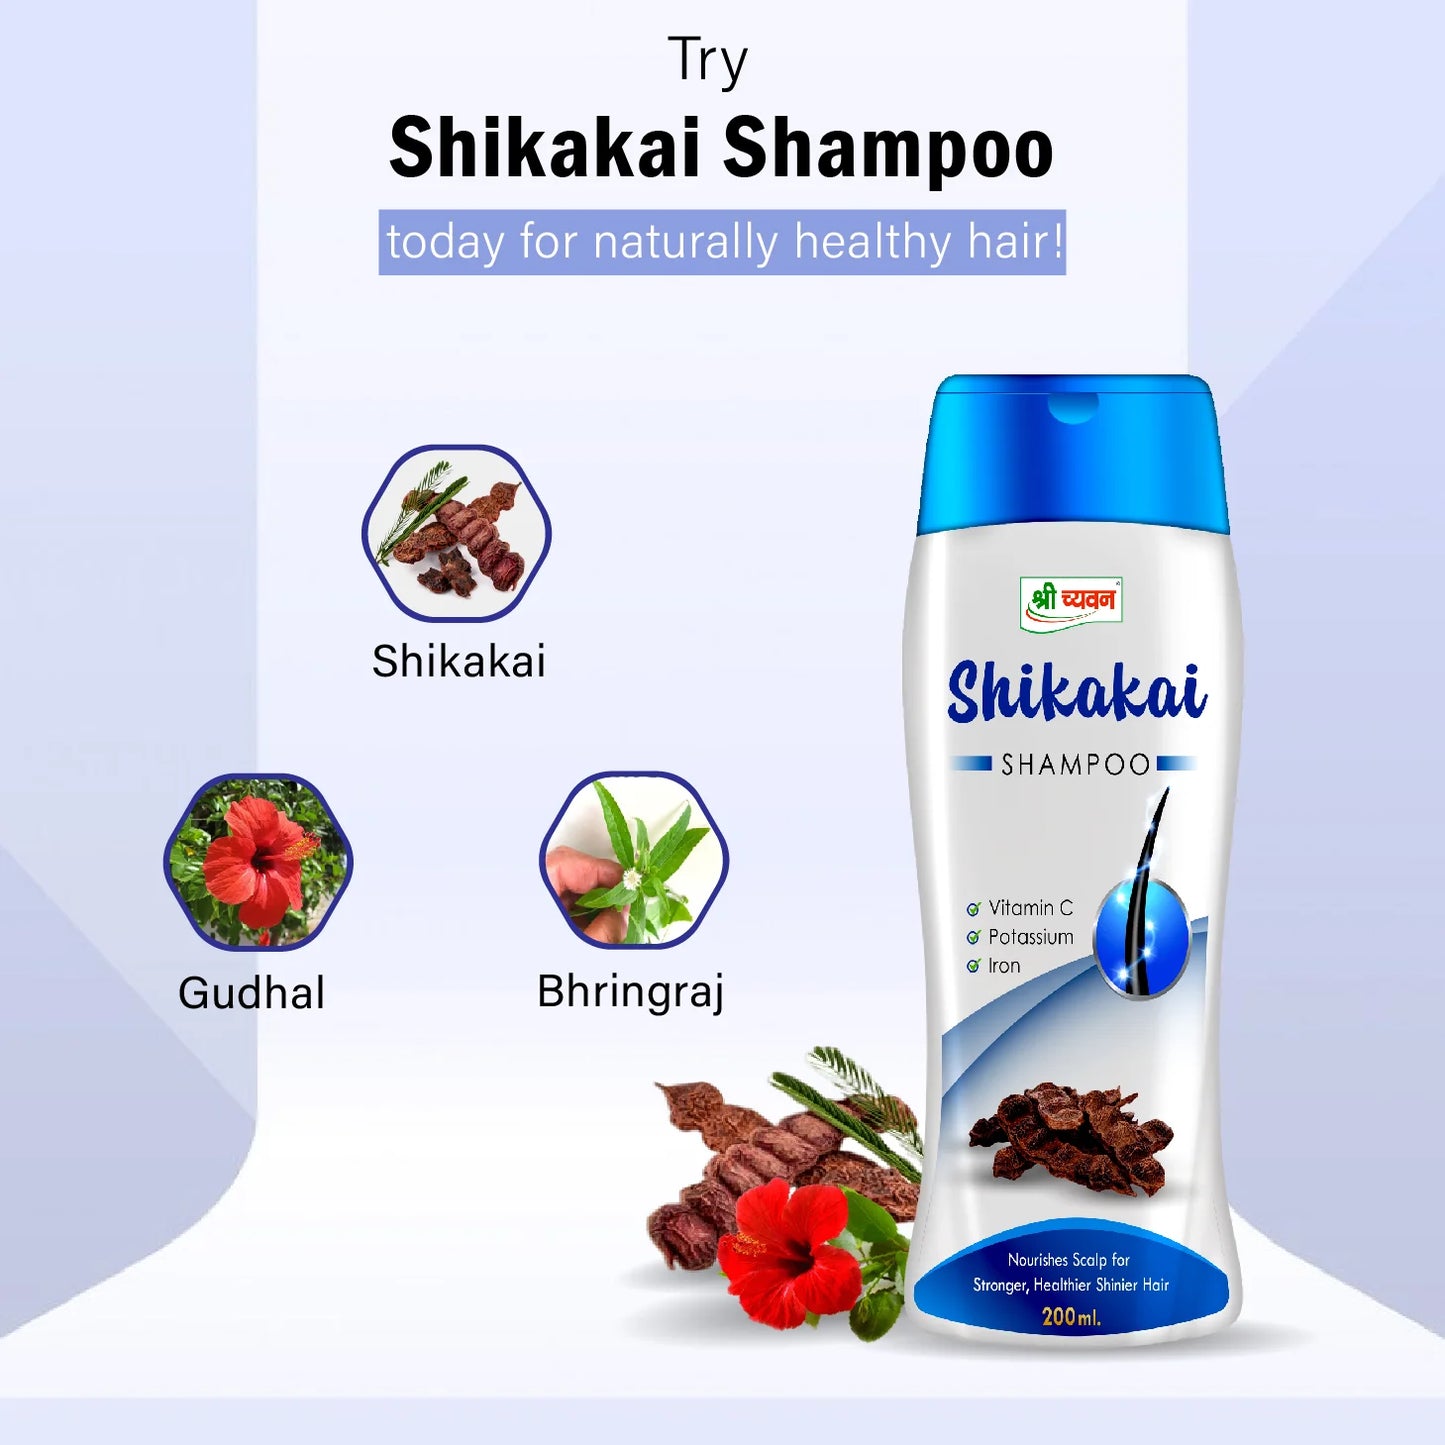 Shikakai shampoo ingredients